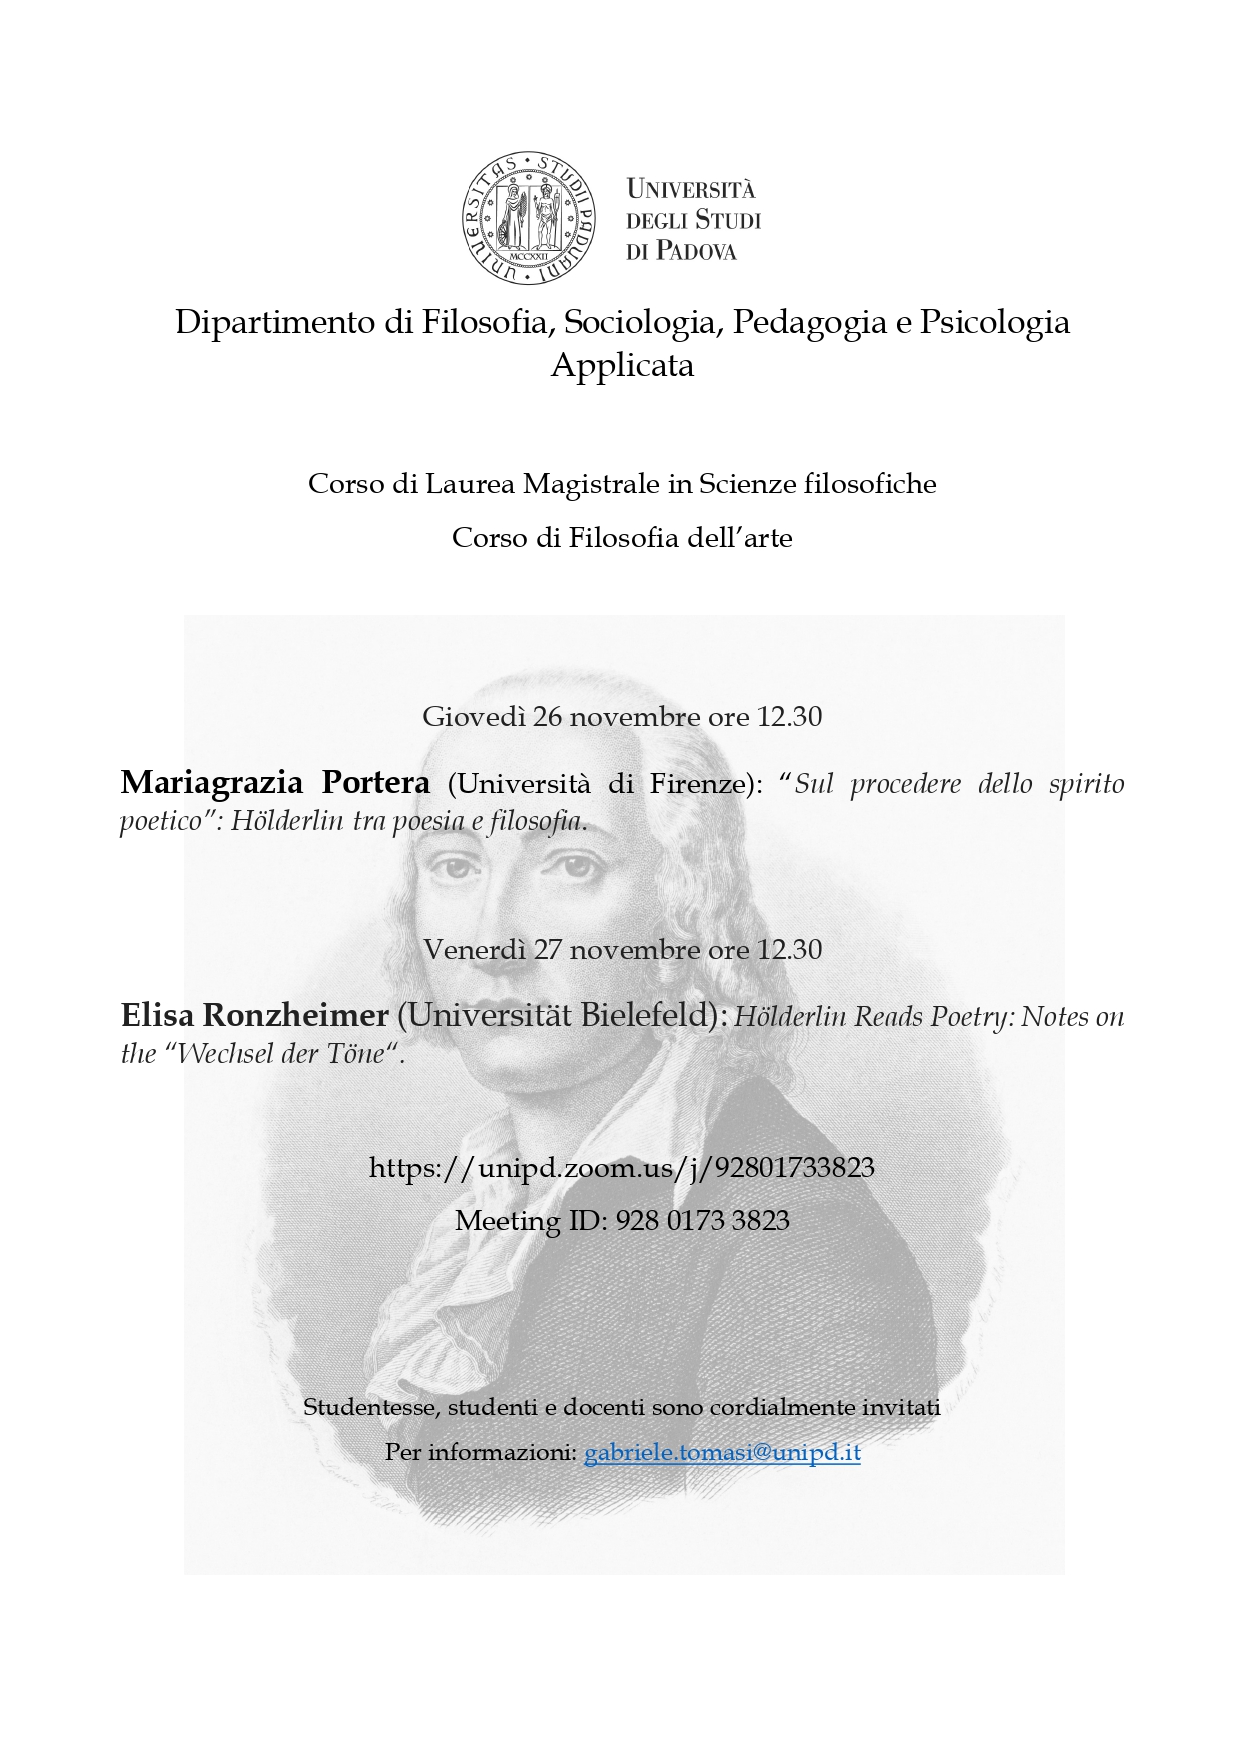 Lectures: Mariagrazia Portera and Elisa Ronzheimer on Hölderlin (Padova, 26 and 27 november 2020)